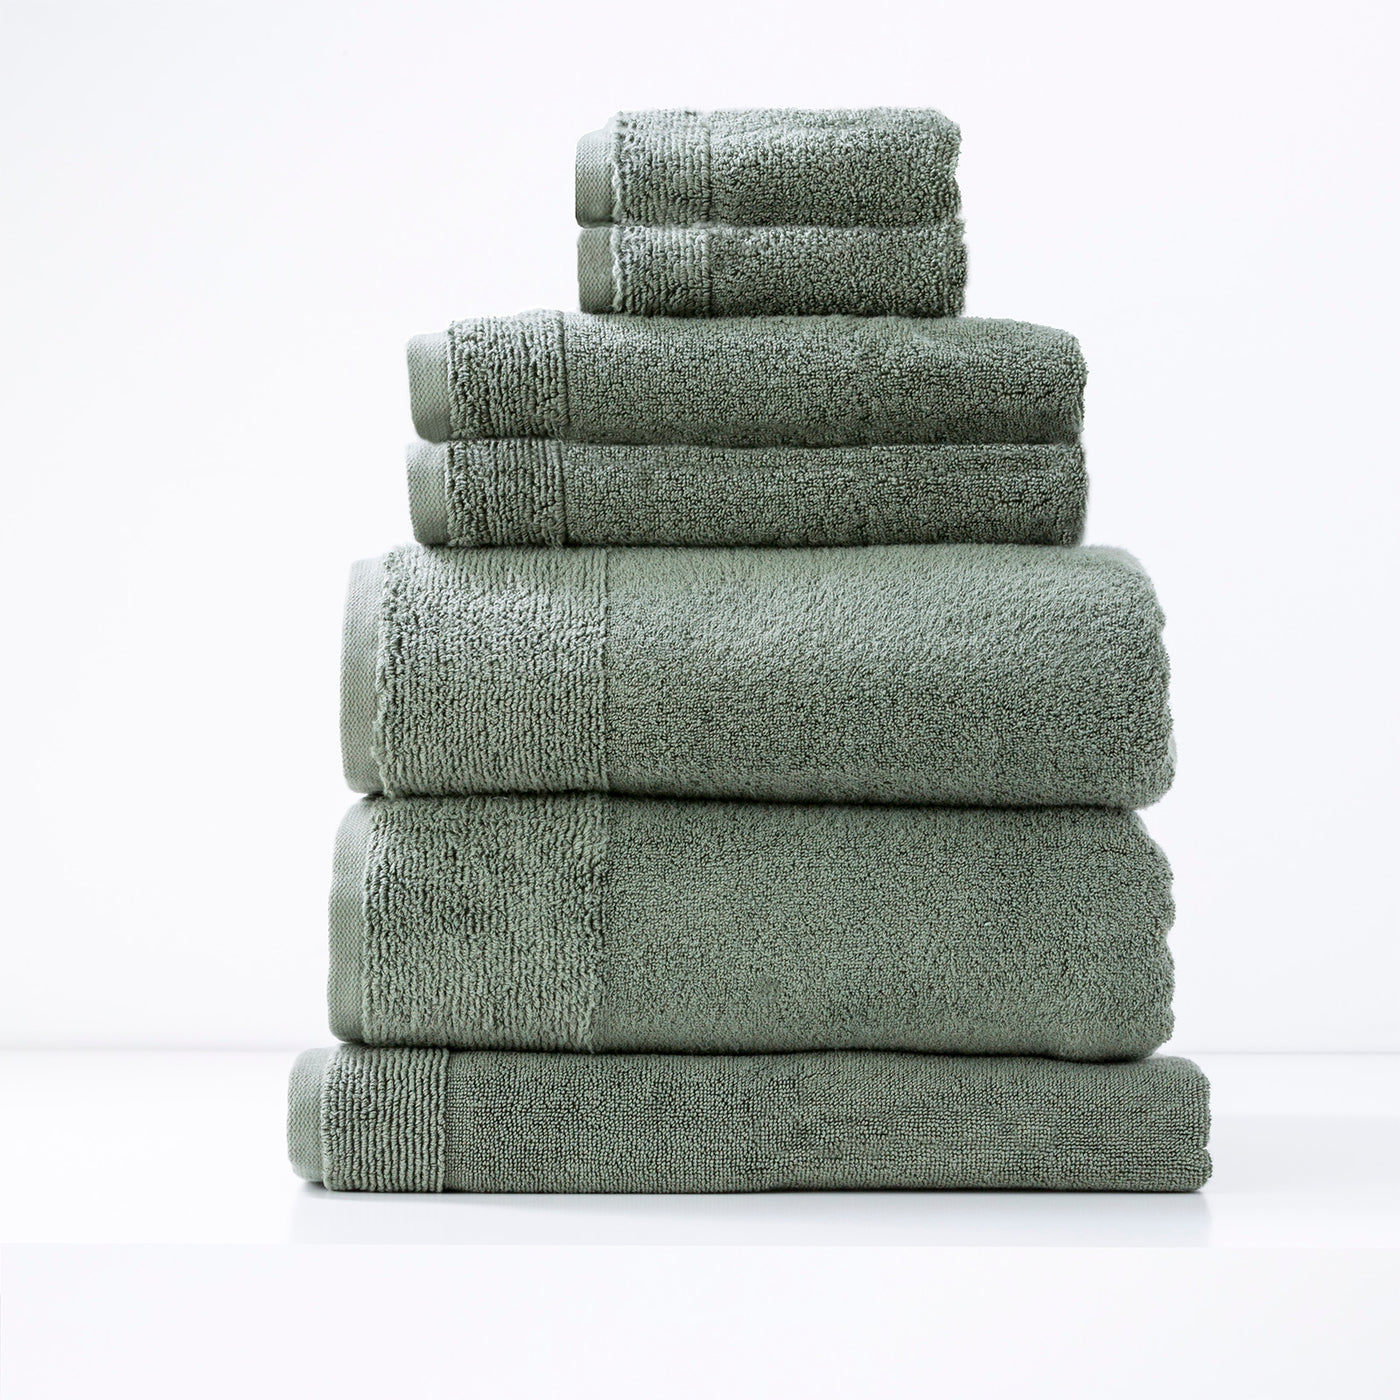 quick dry bath towels-green bath towels-best bath towels australia-bath towels-bath towels on sale-luxury bath towels-colourful bath towels- bath towel sets-bath towel set-afterpay-free shipping-free post-australia- new zealand.